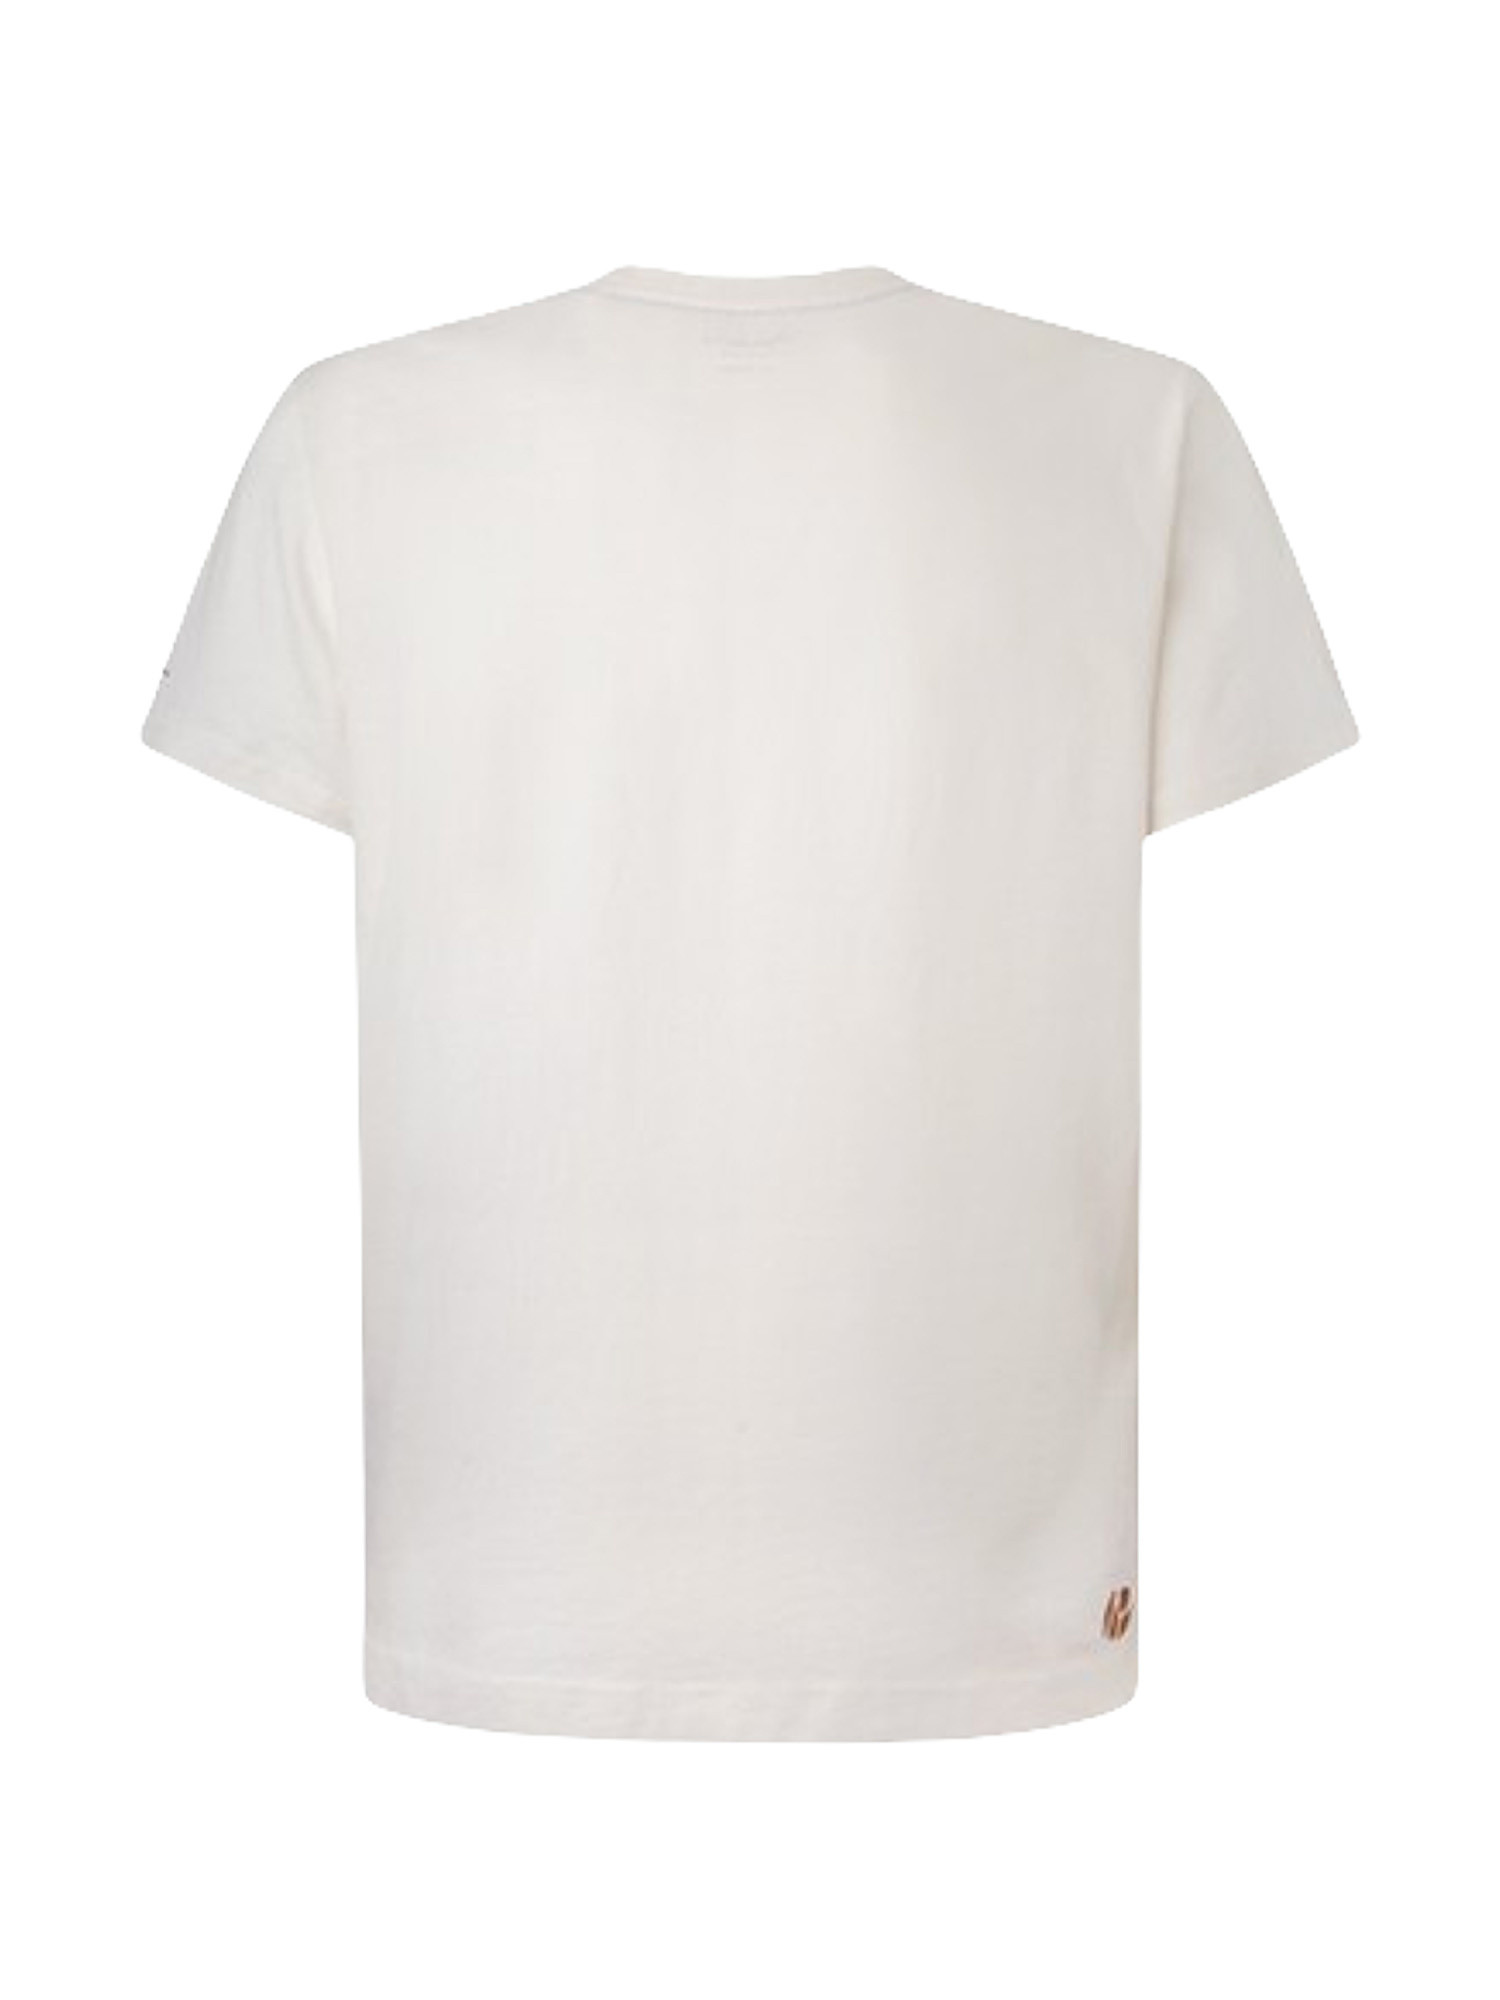 T-shirt con effetto vernice aegir, Beige, large